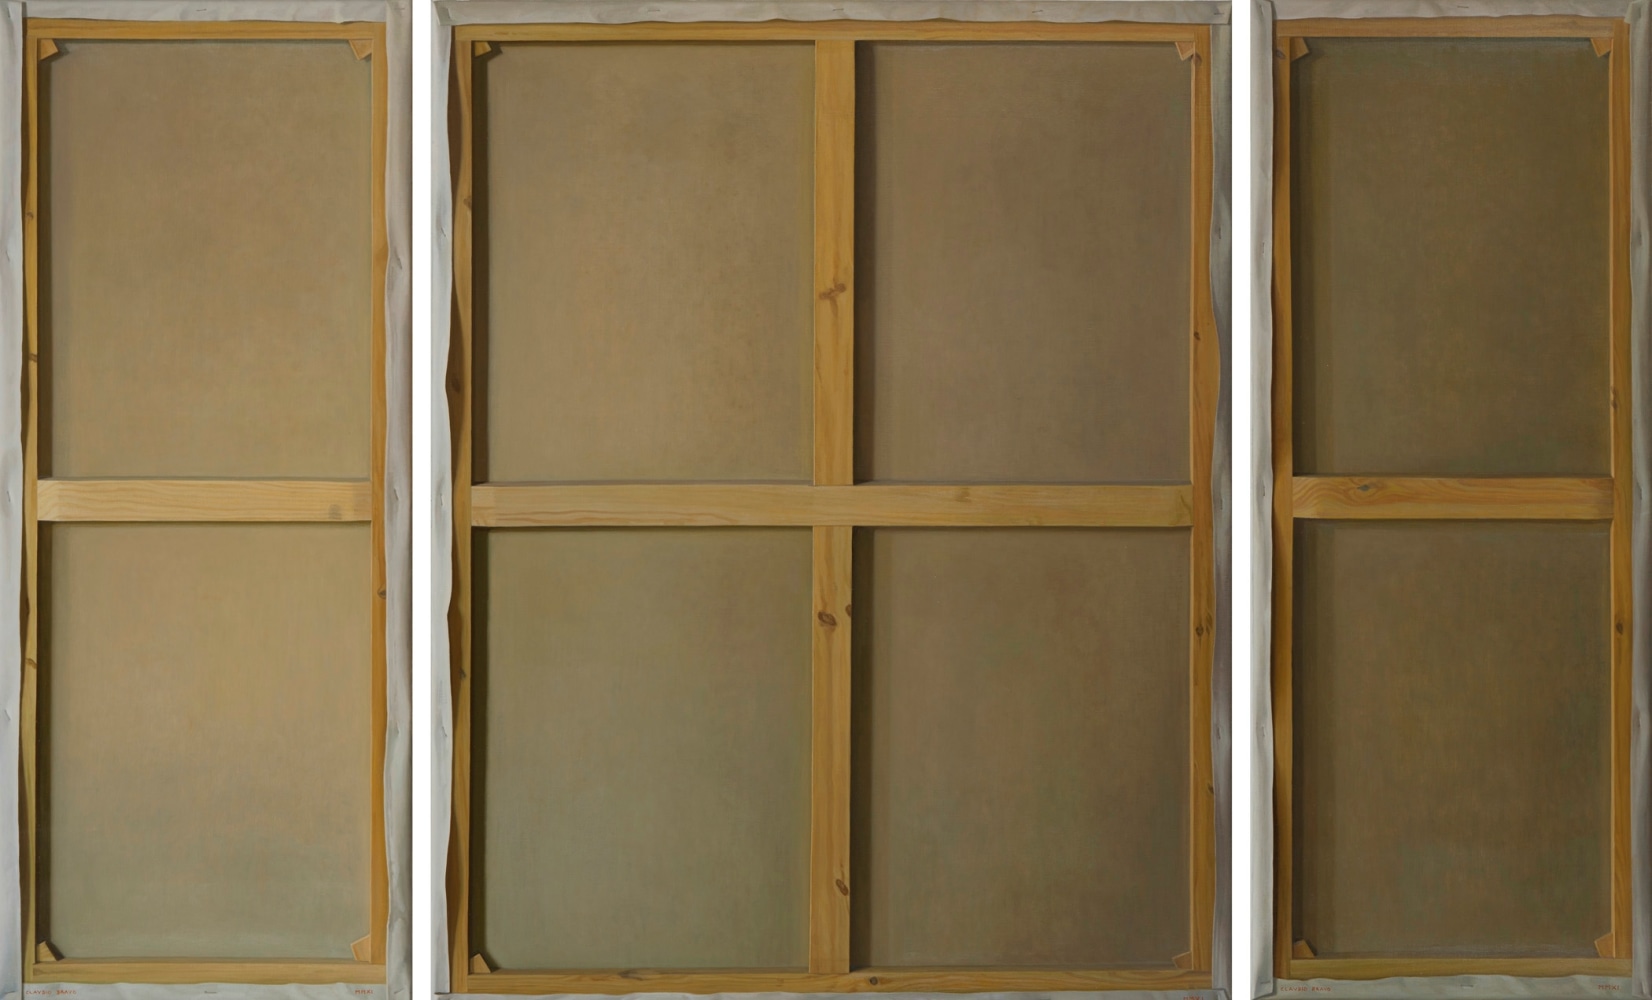 Claudio Bravo

Tr&amp;iacute;ptico / Triptych, 2011&amp;nbsp;&amp;nbsp;
oil on canvas
side panels: 59 x 23 5/8 in./150 x 60 cm
center panel: 59 x 47 1/4 in. / 150 x 120 cm

overall: 59 x 94 1/2 in. /&amp;nbsp;150&amp;nbsp;x 240 cm